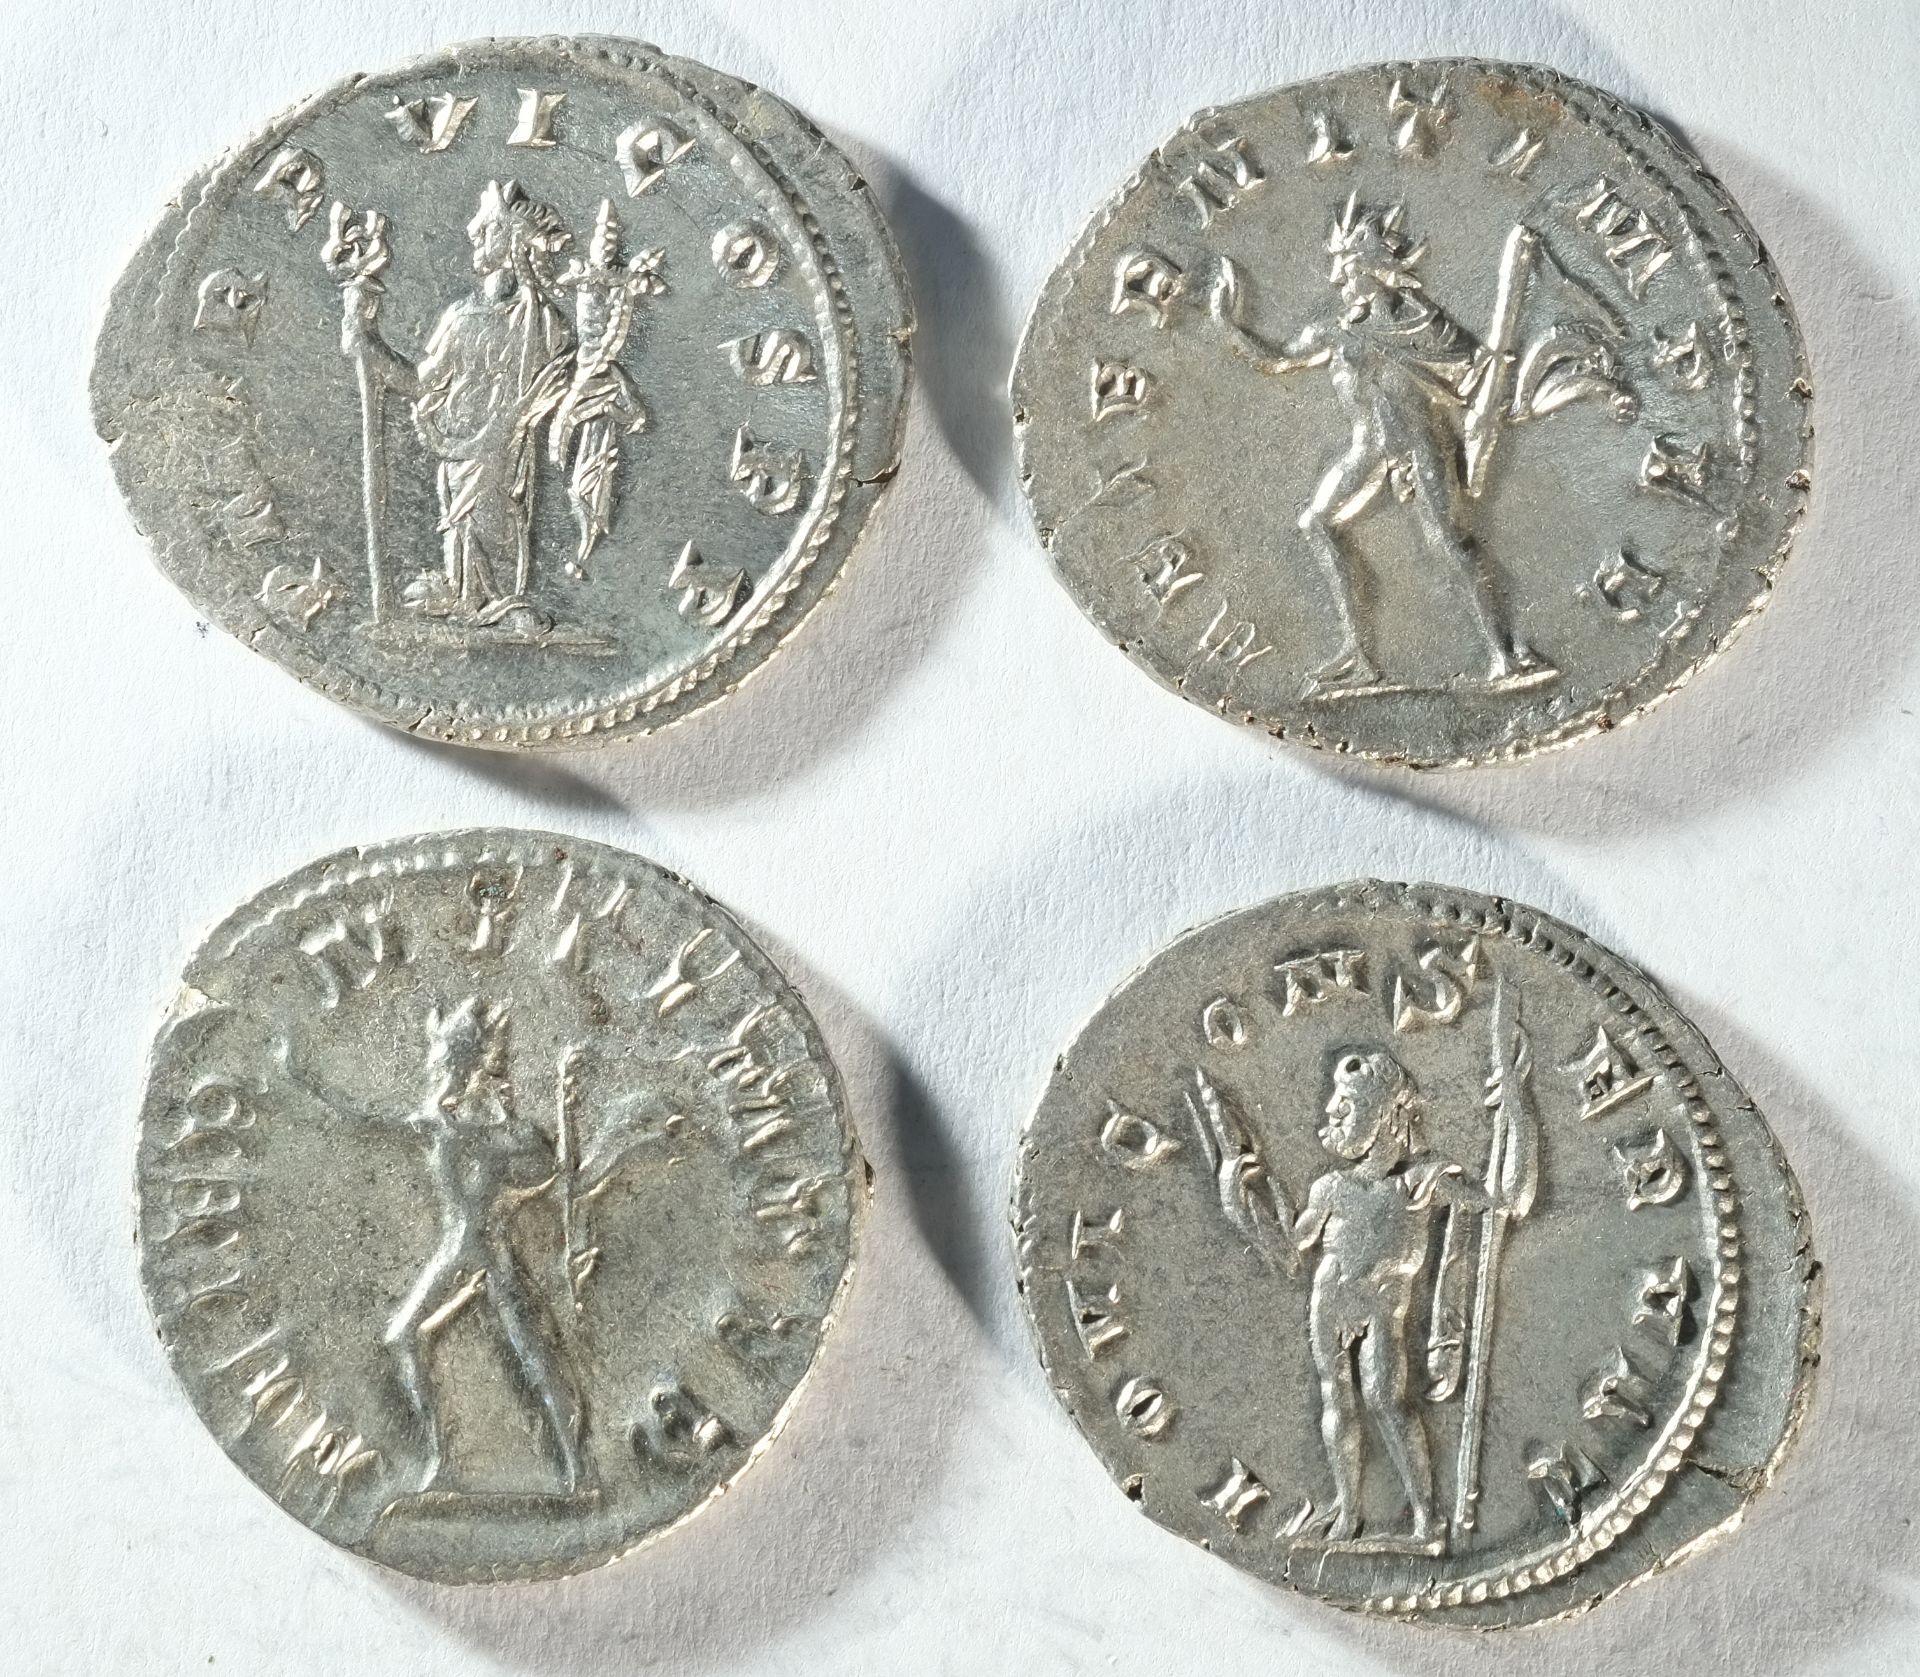 4x silver antoninianii of Philip II (247 - 249 CE)